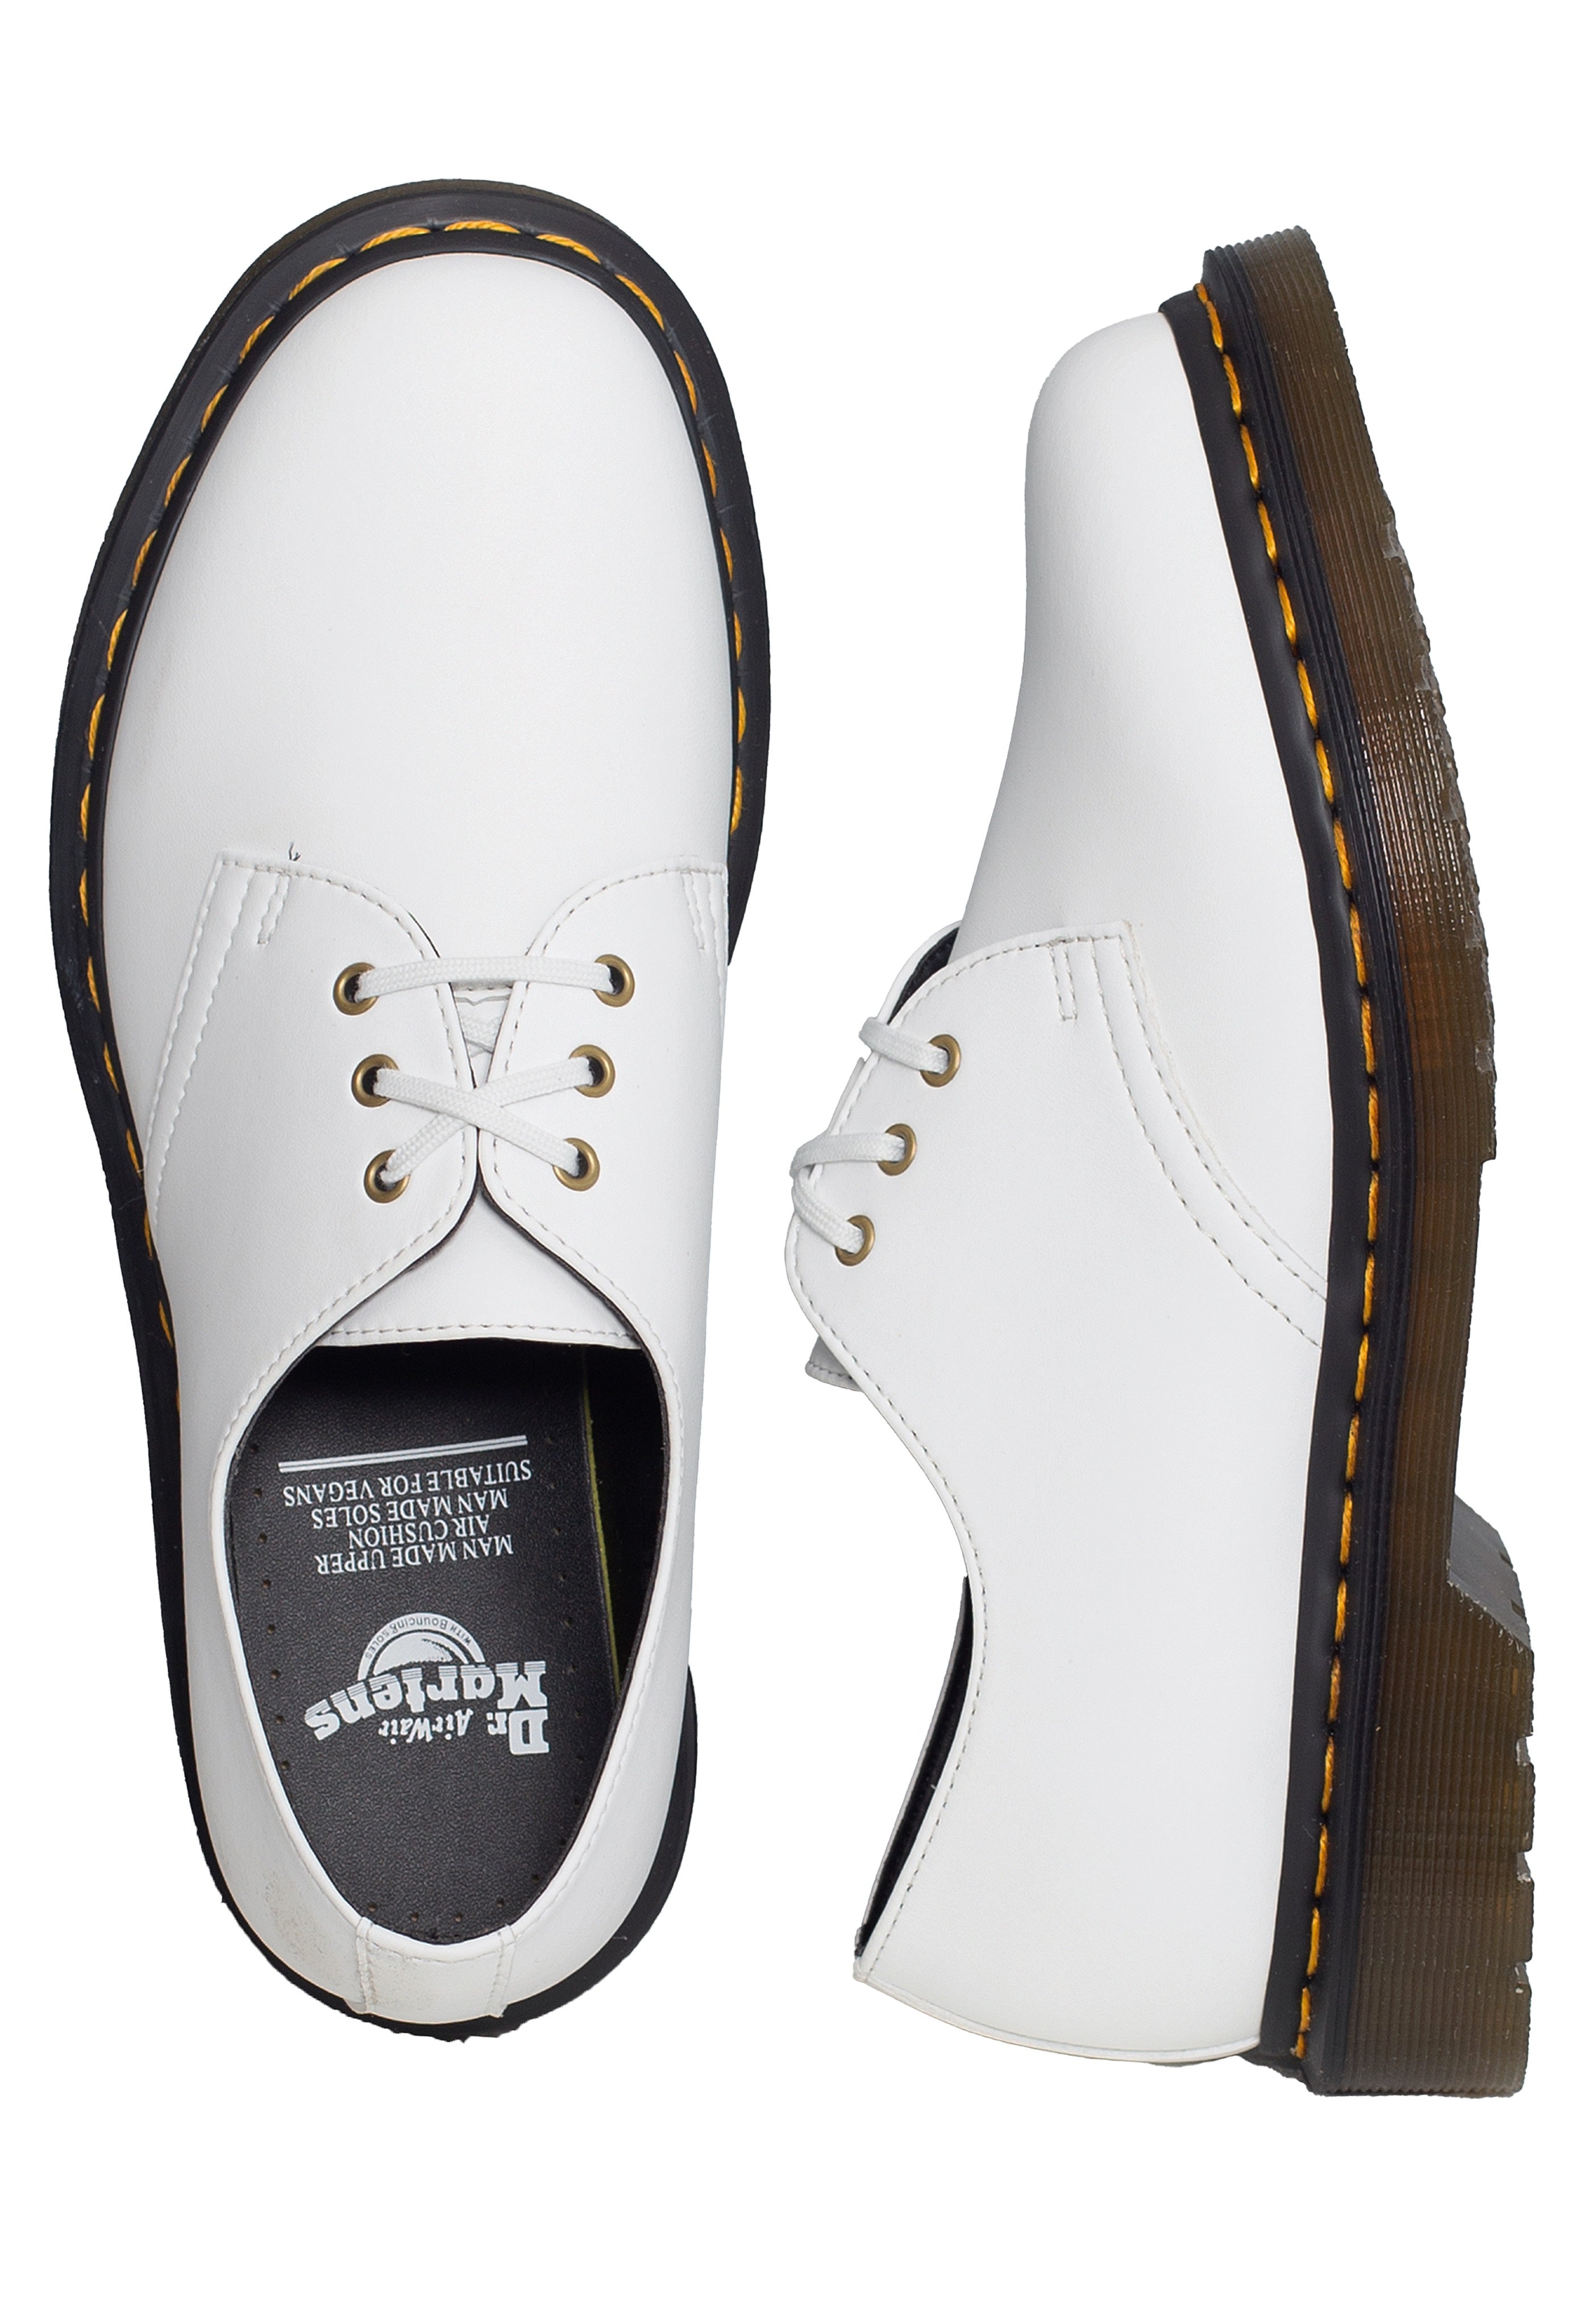 Dr. Martens - Vegan 1461 Optical White Kemble - Shoes